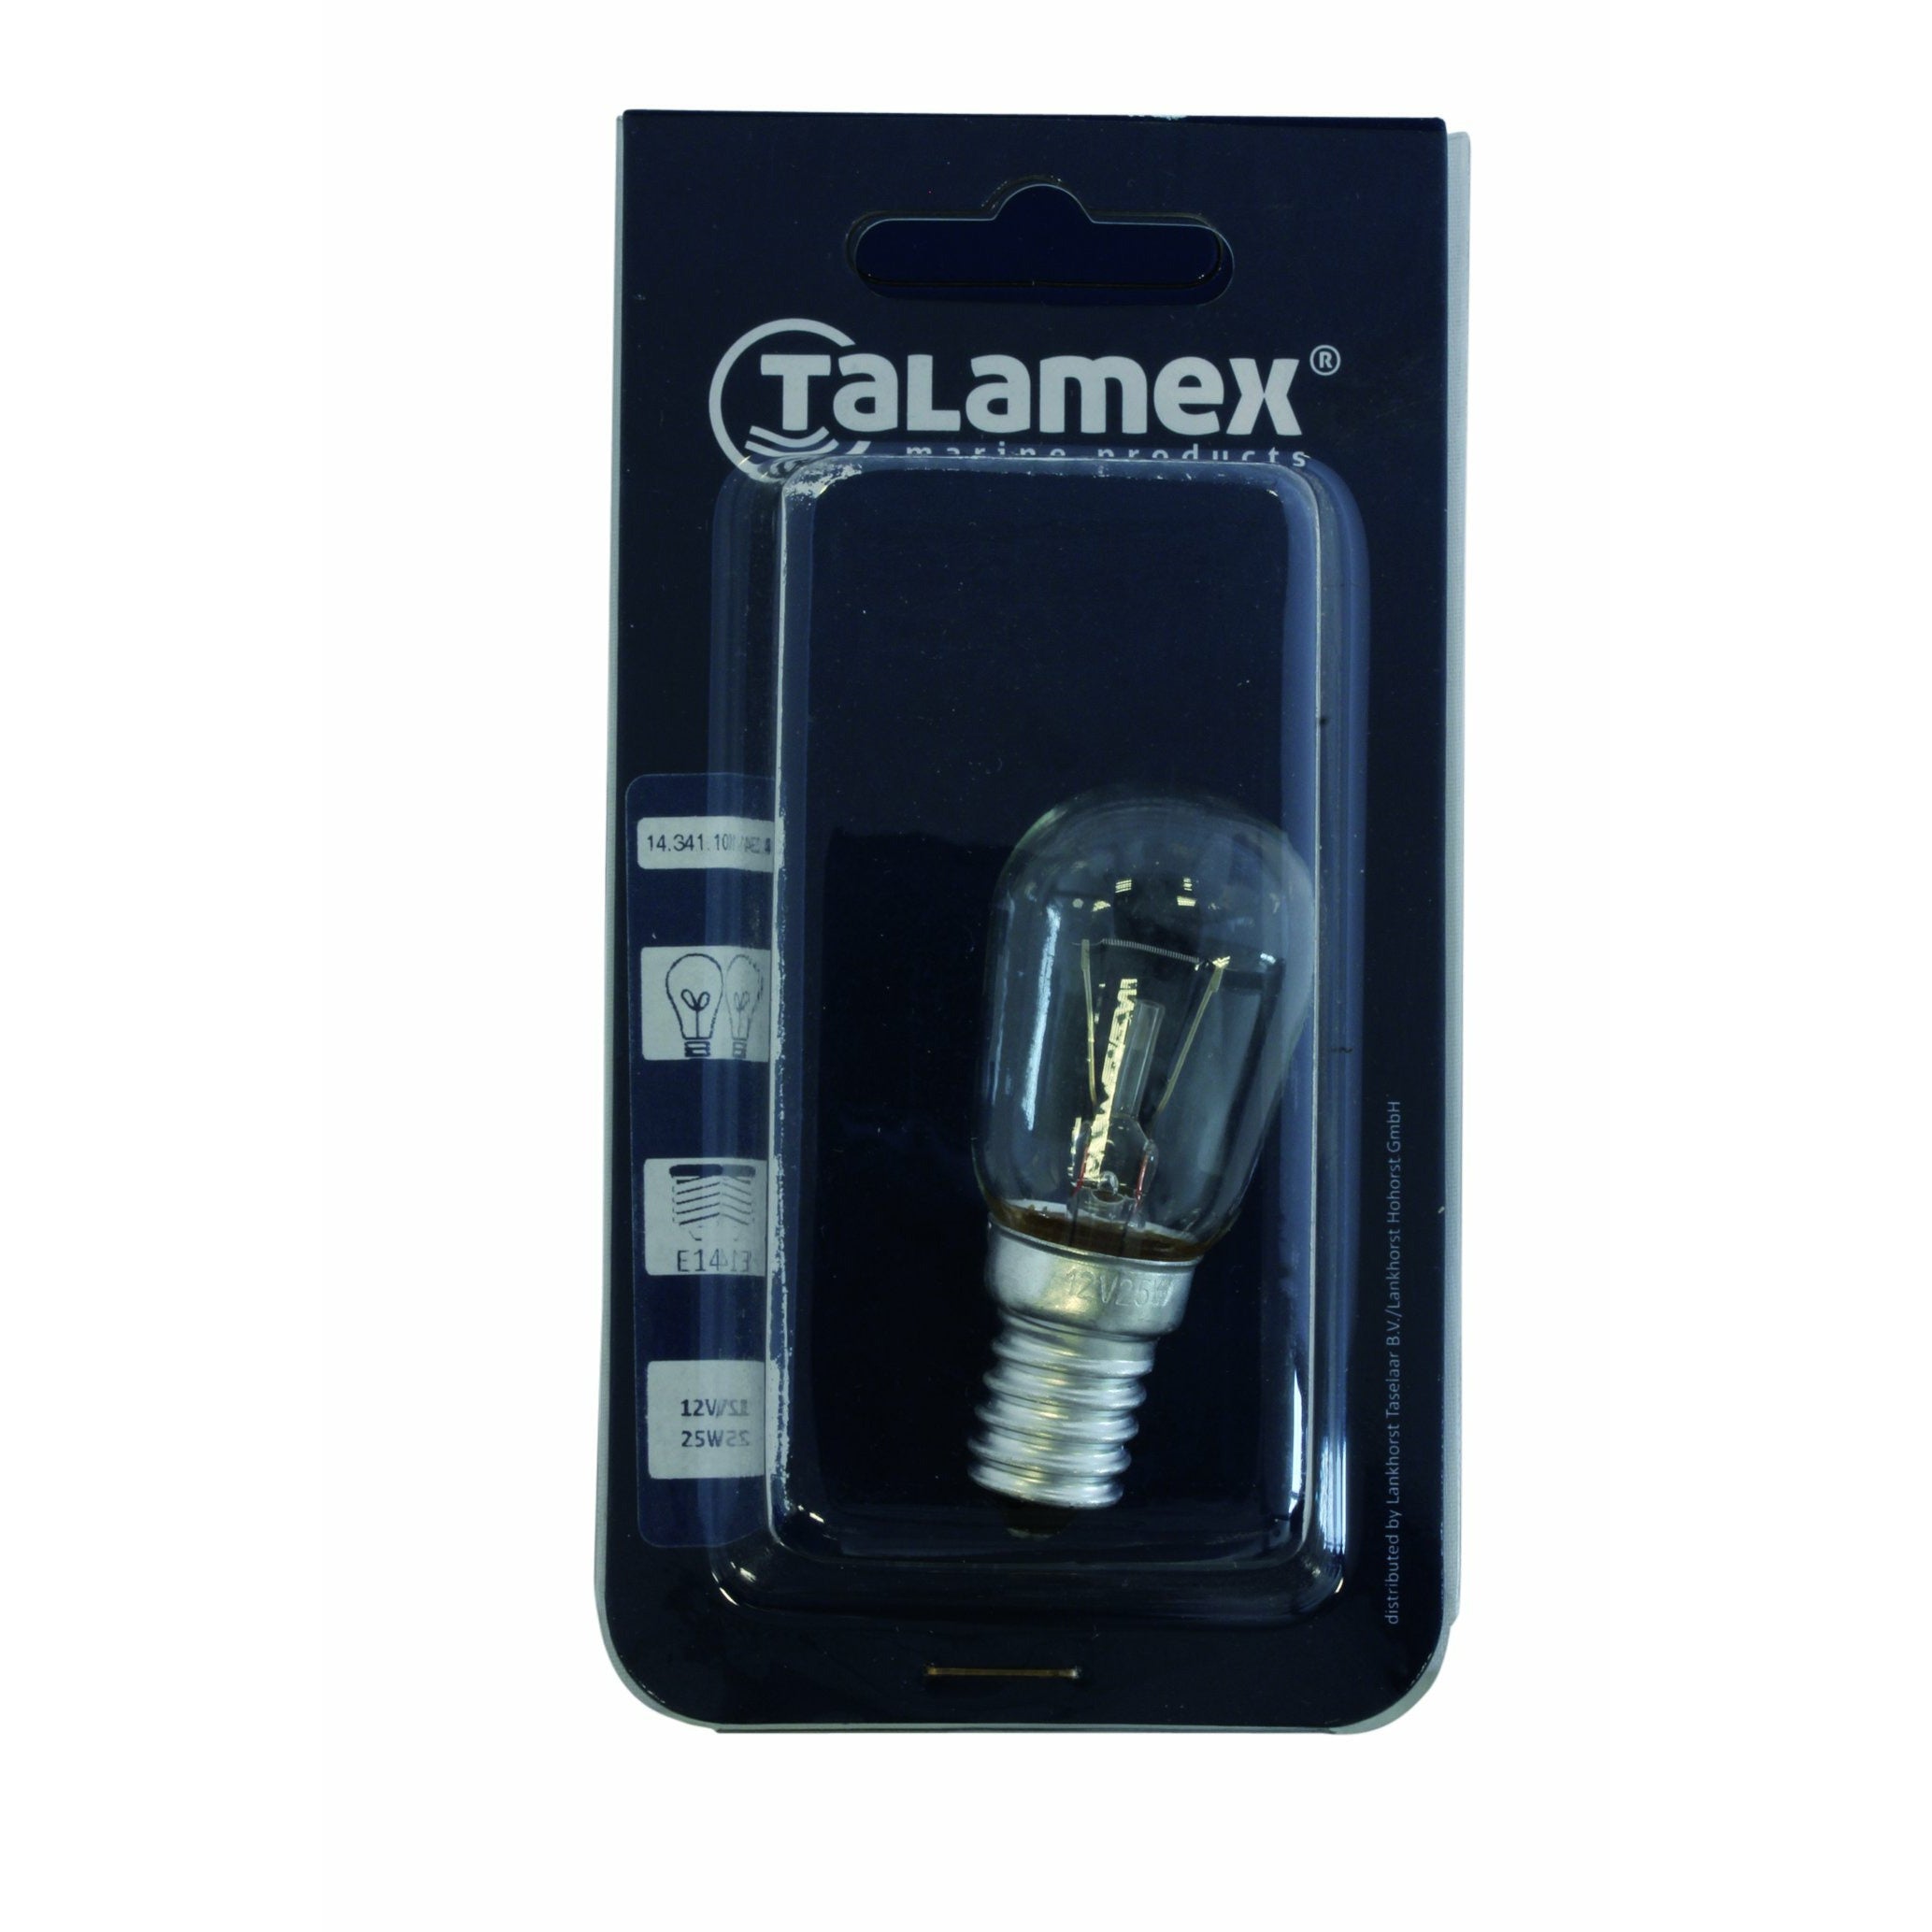 Talamex Perfumelamp 12V-15W E14 14341100